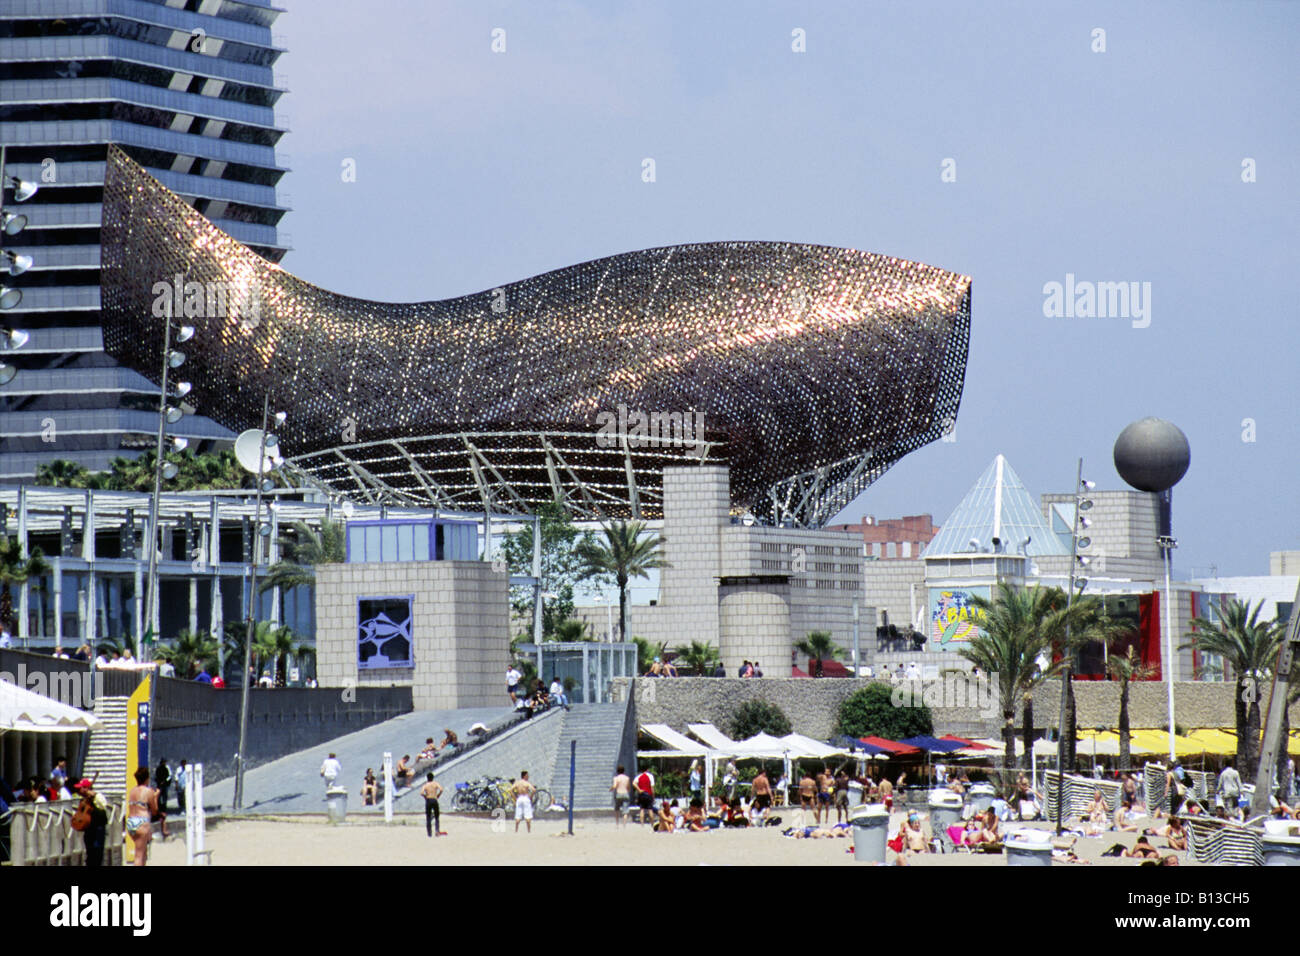 Golden Whale Sculpture Looms Over Barceloneta Beach, Villa Olympica Olympic Village, Barcelona, Spain Stock Photo